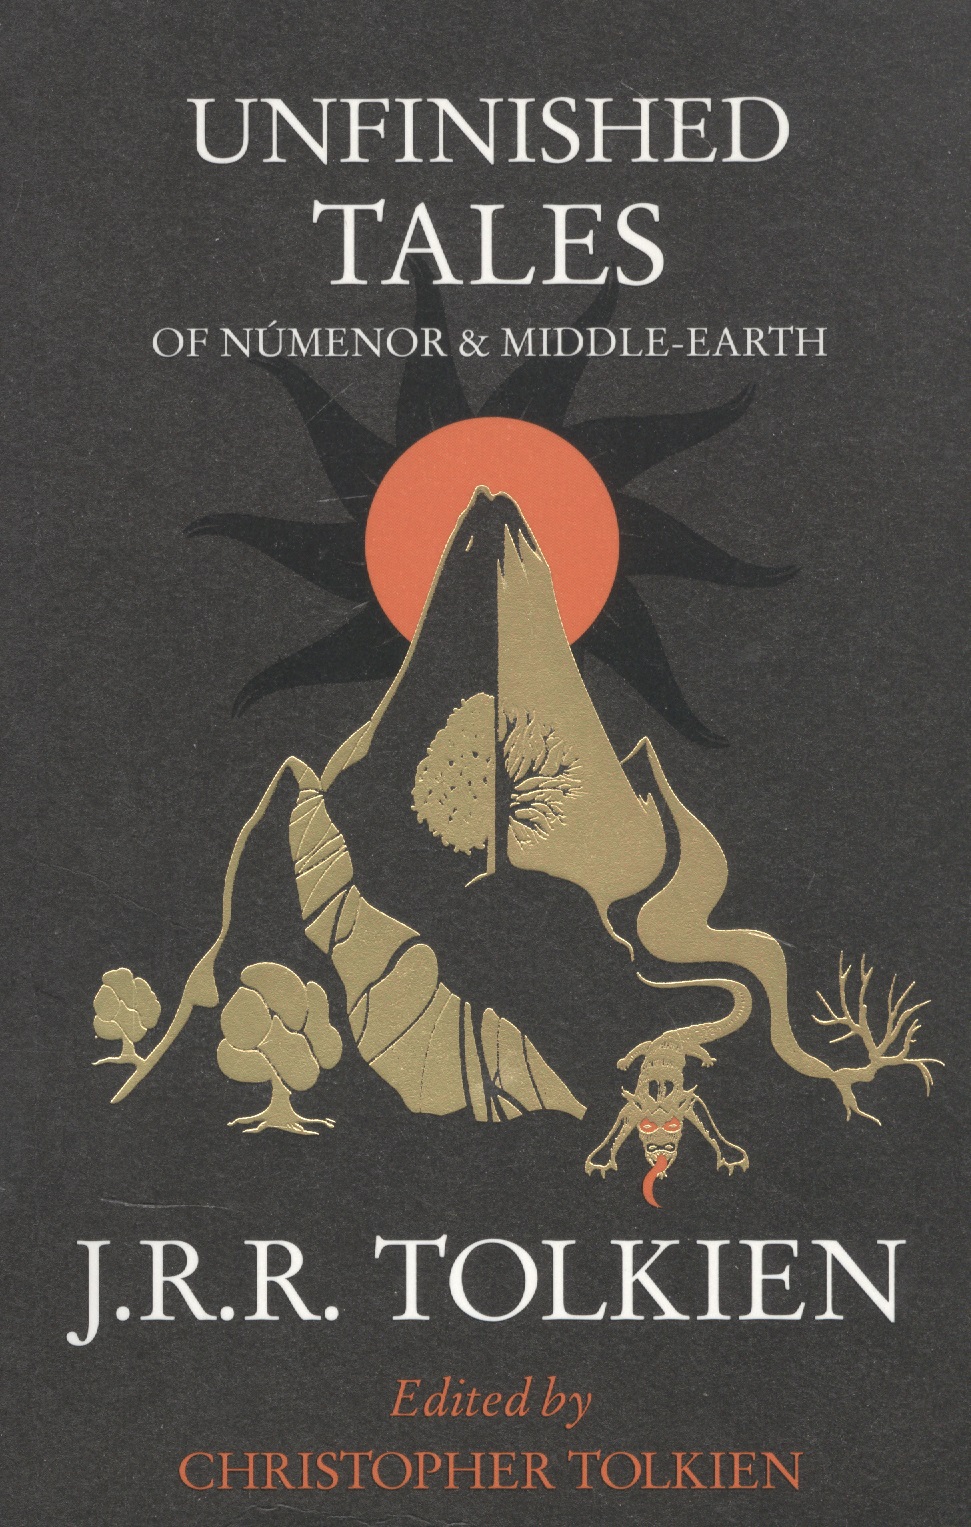 толкин джон рональд руэл unfinished tales Толкин Джон Рональд Руэл Unfinished Tales: Of Numenor and Middle-Earth